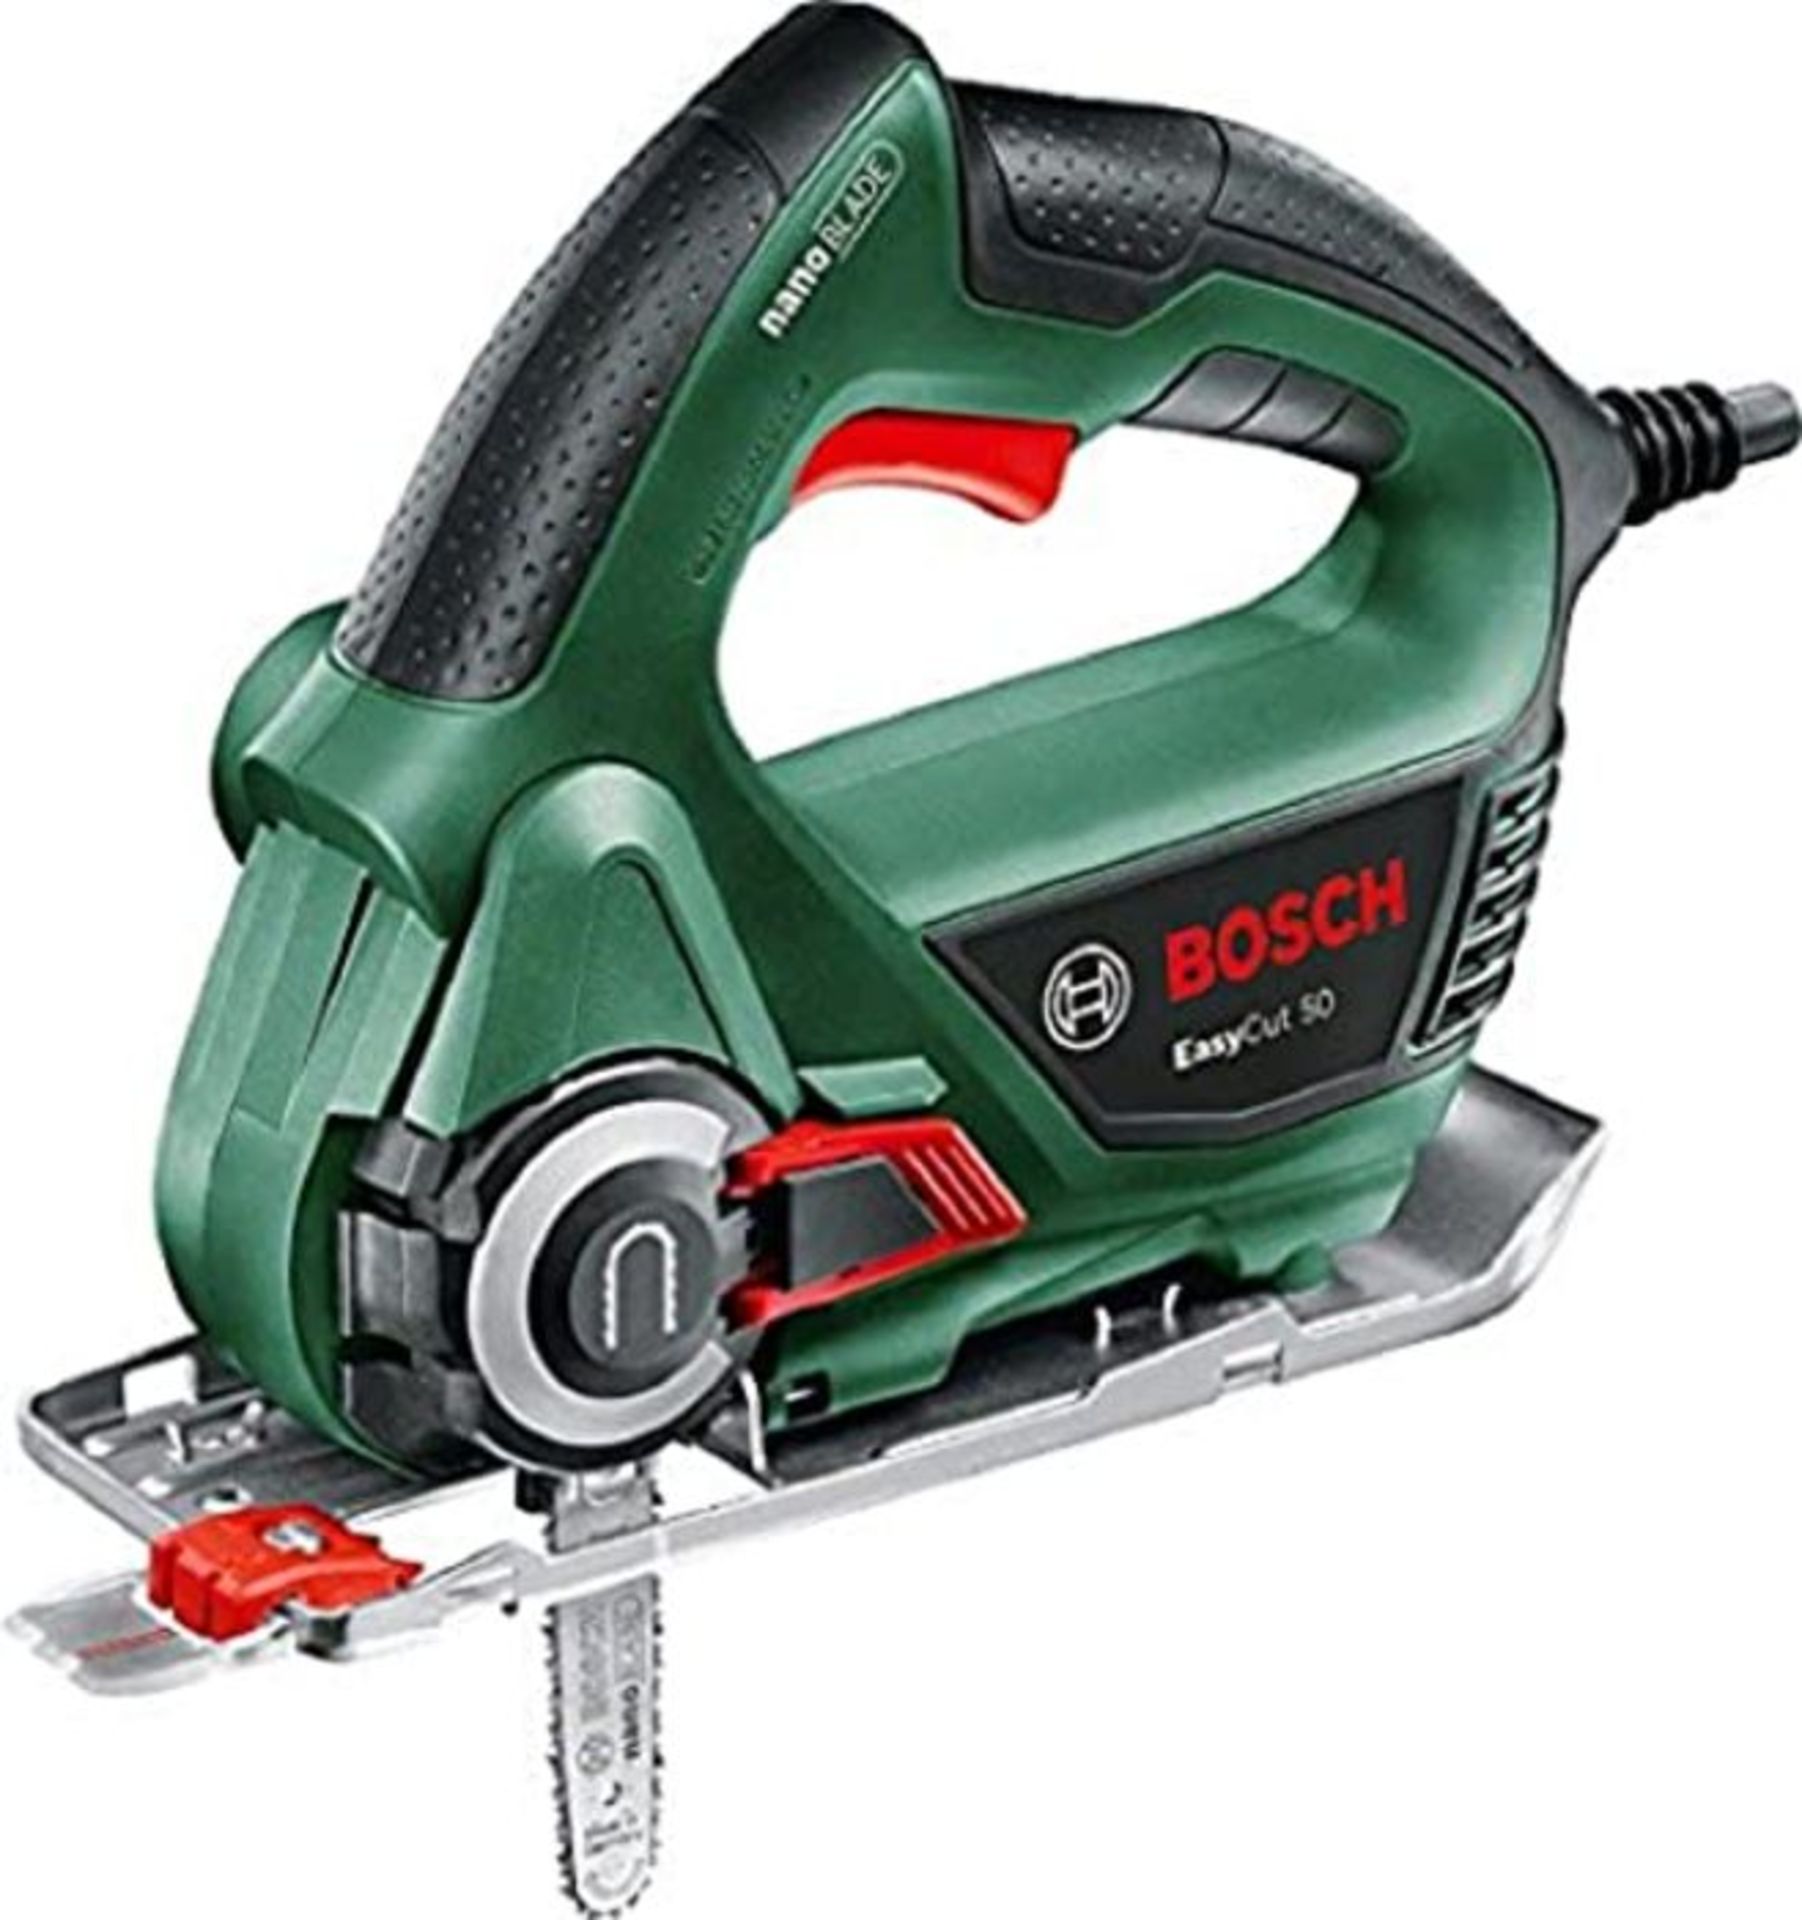 RRP £75.00 Bosch Home and Garden EasyCut 50 saw (500 W, NanoBlade technology, saw blade, protecti